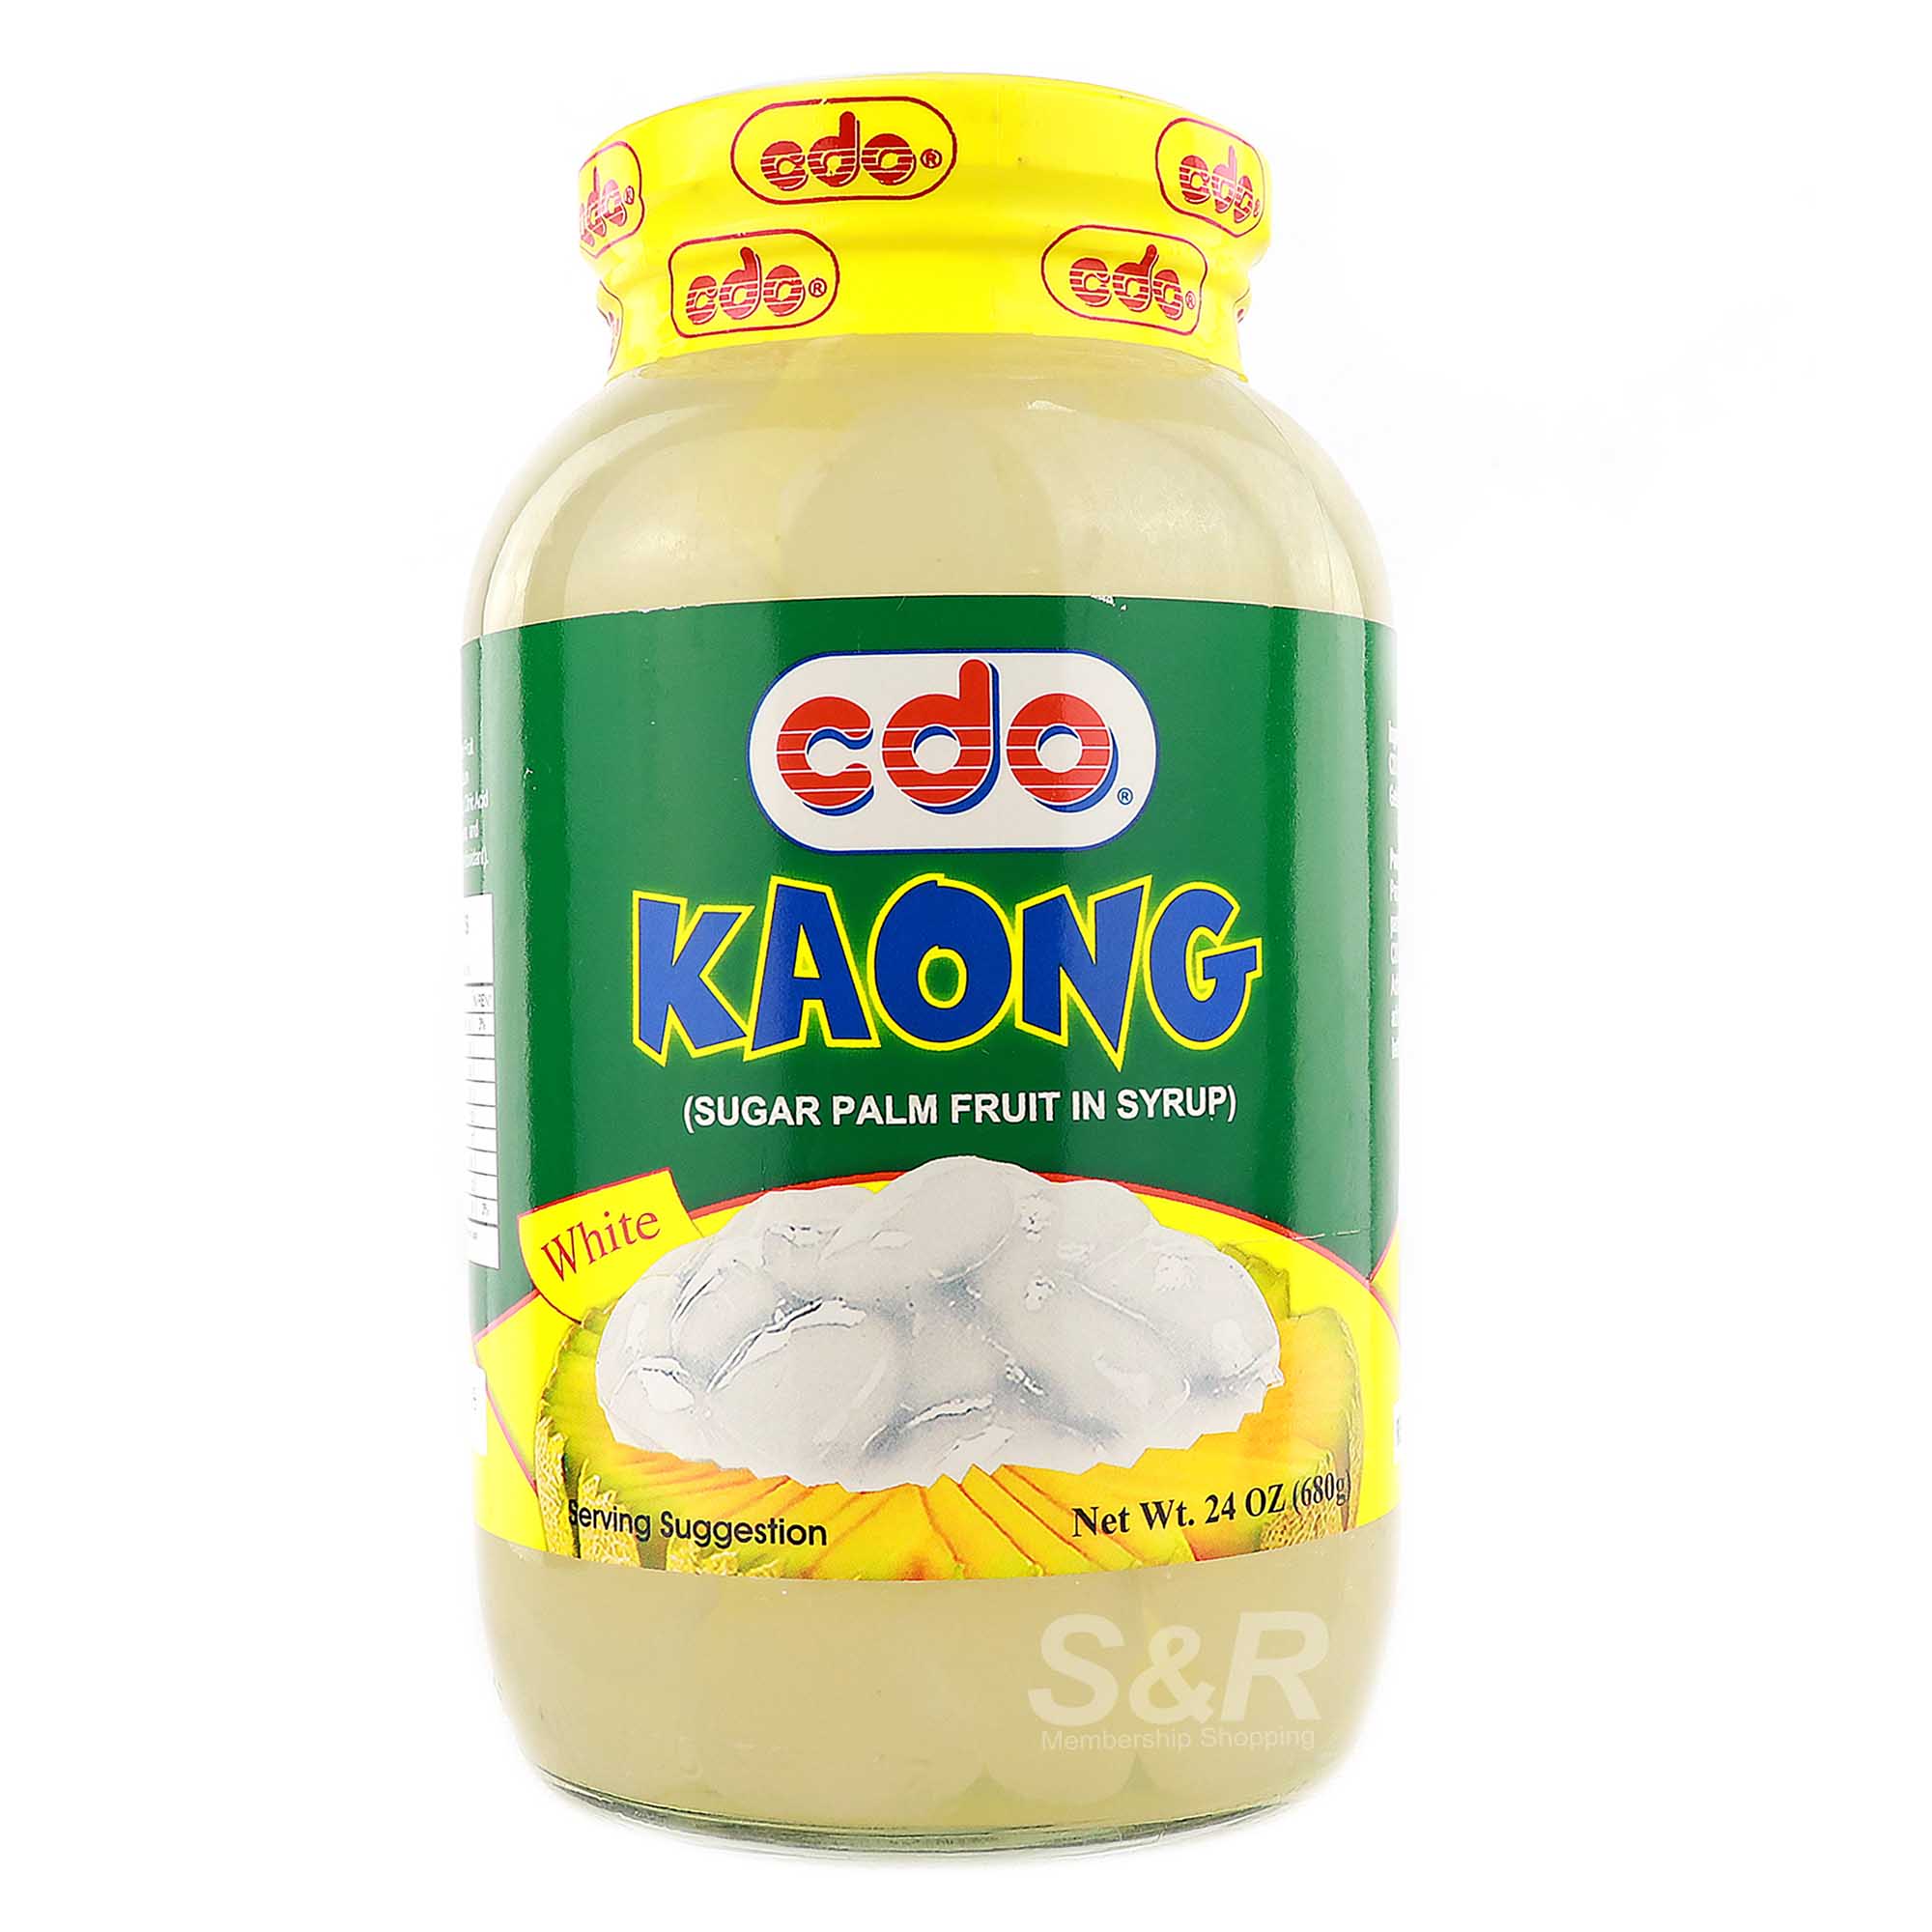 CDO White Kaong Sugar Palm Fruit in Syrup 680g